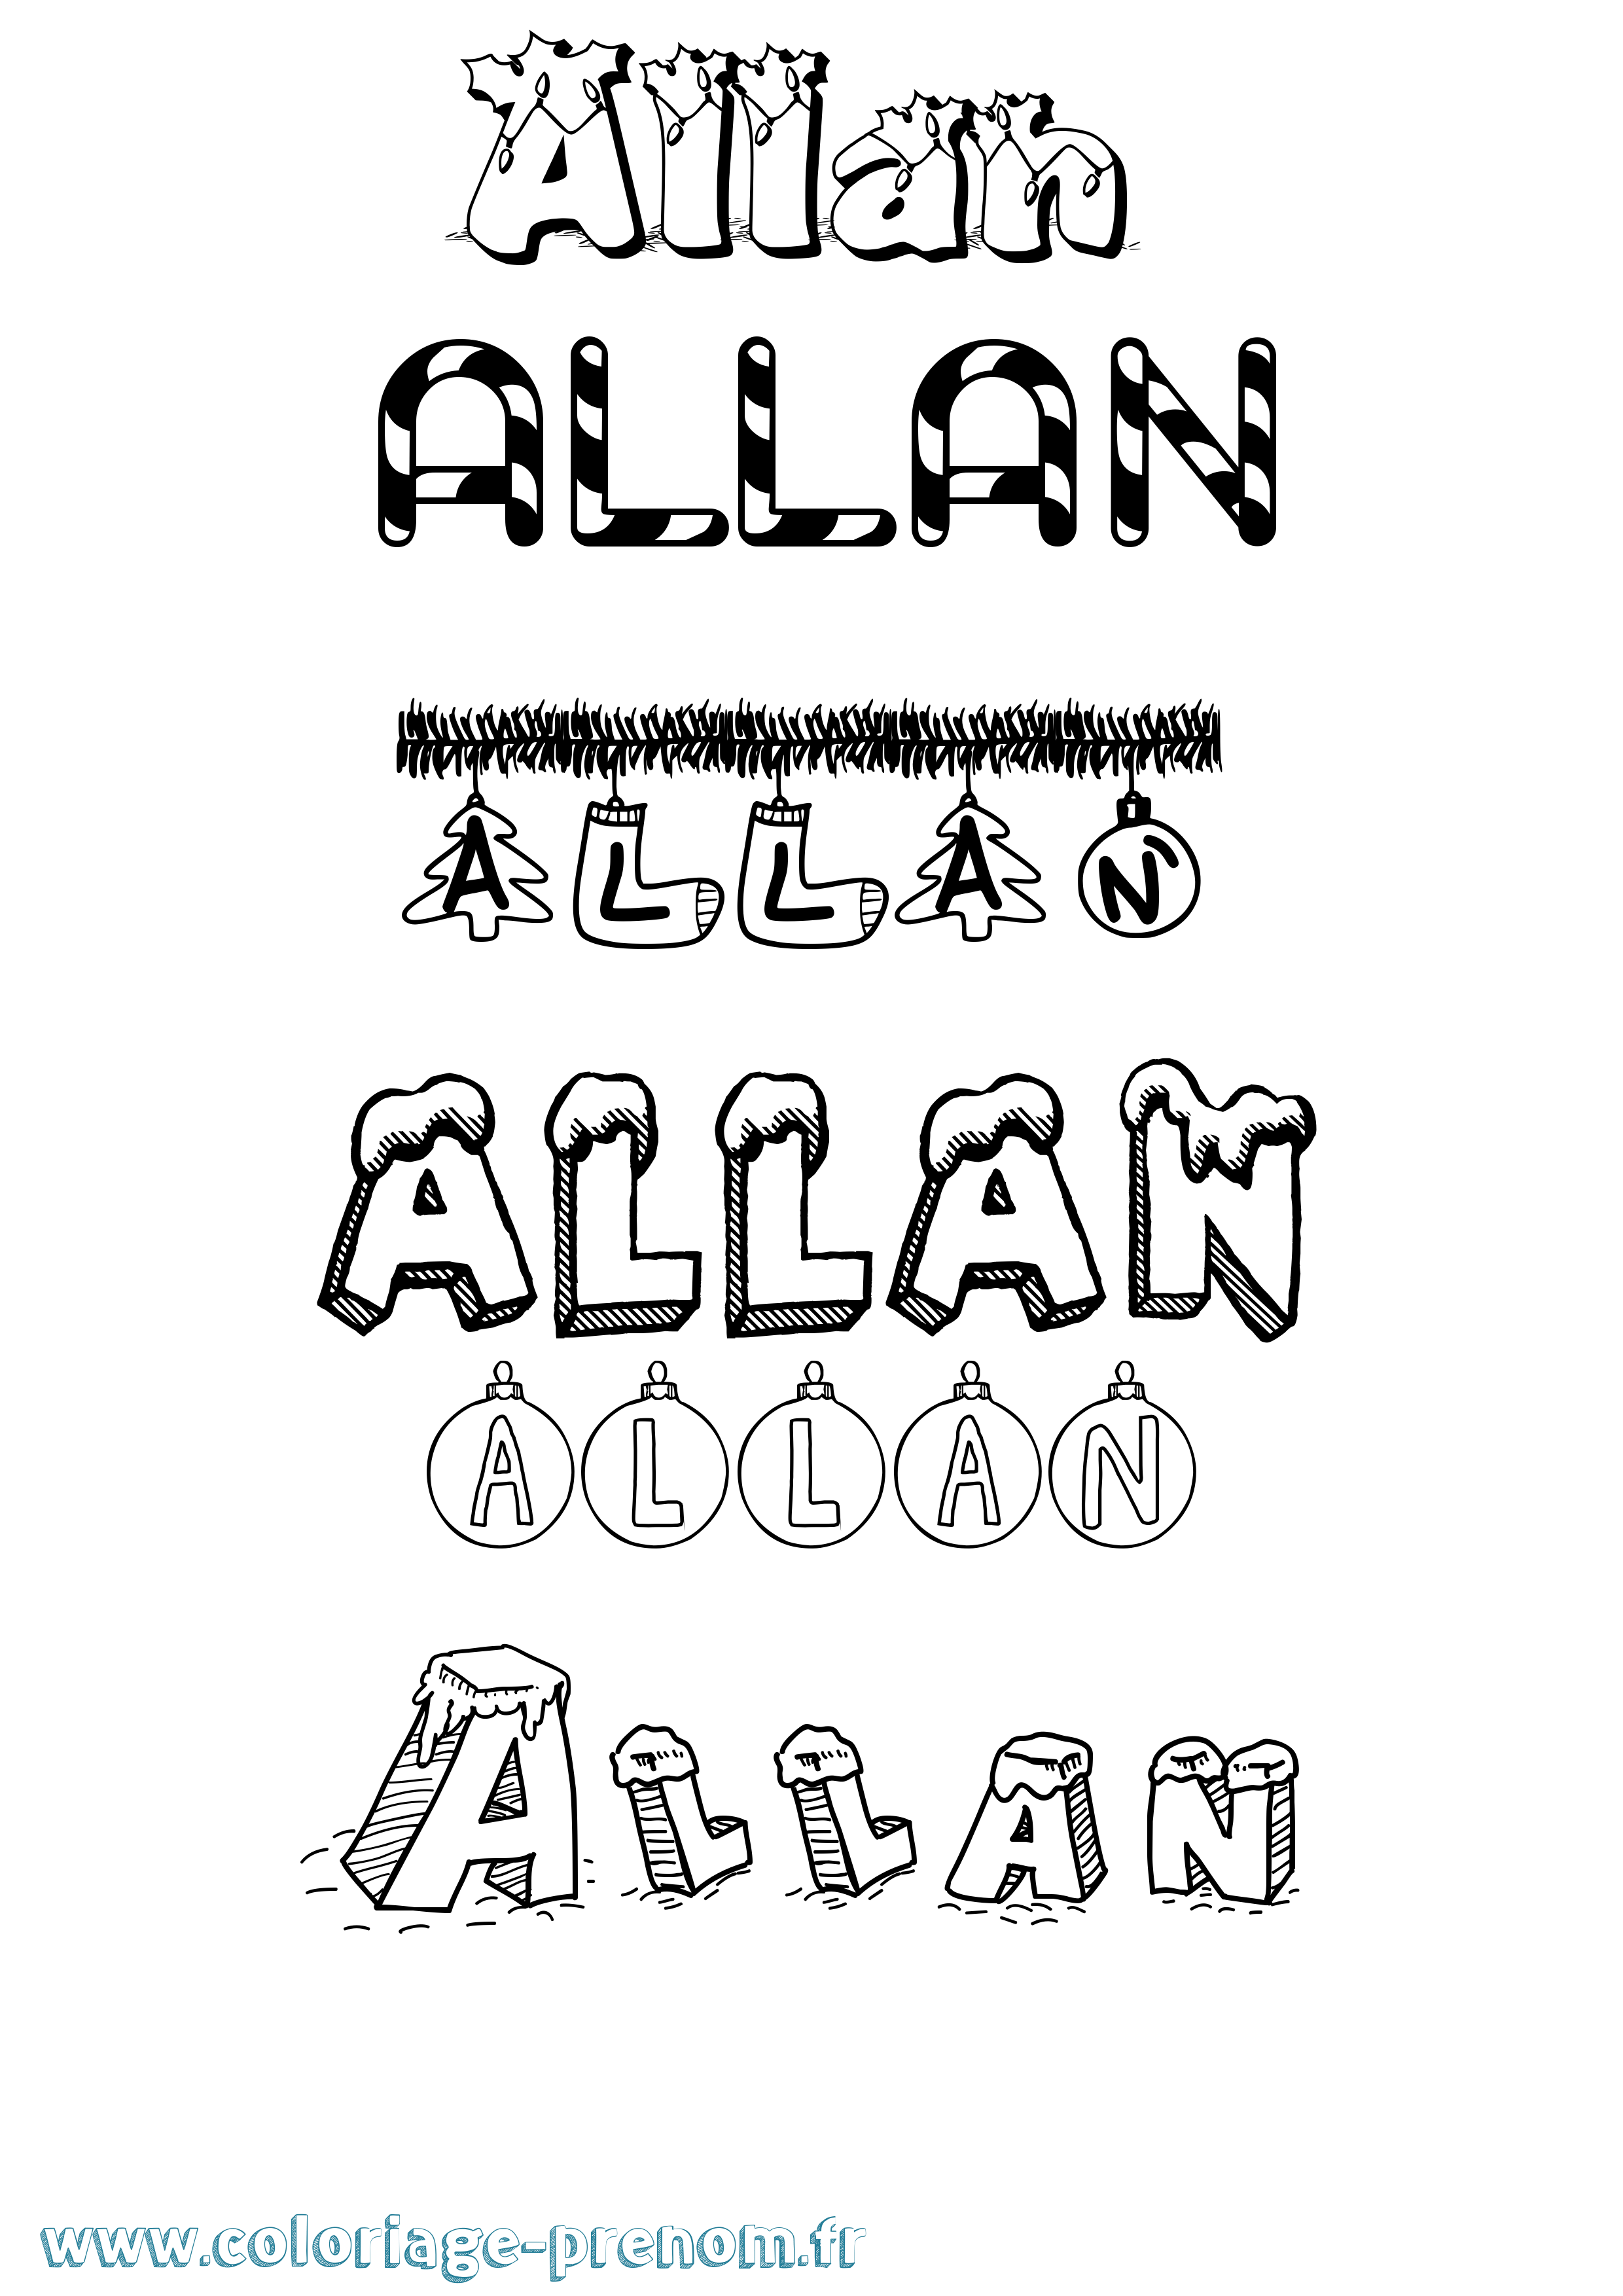 Coloriage prénom Allan Noël